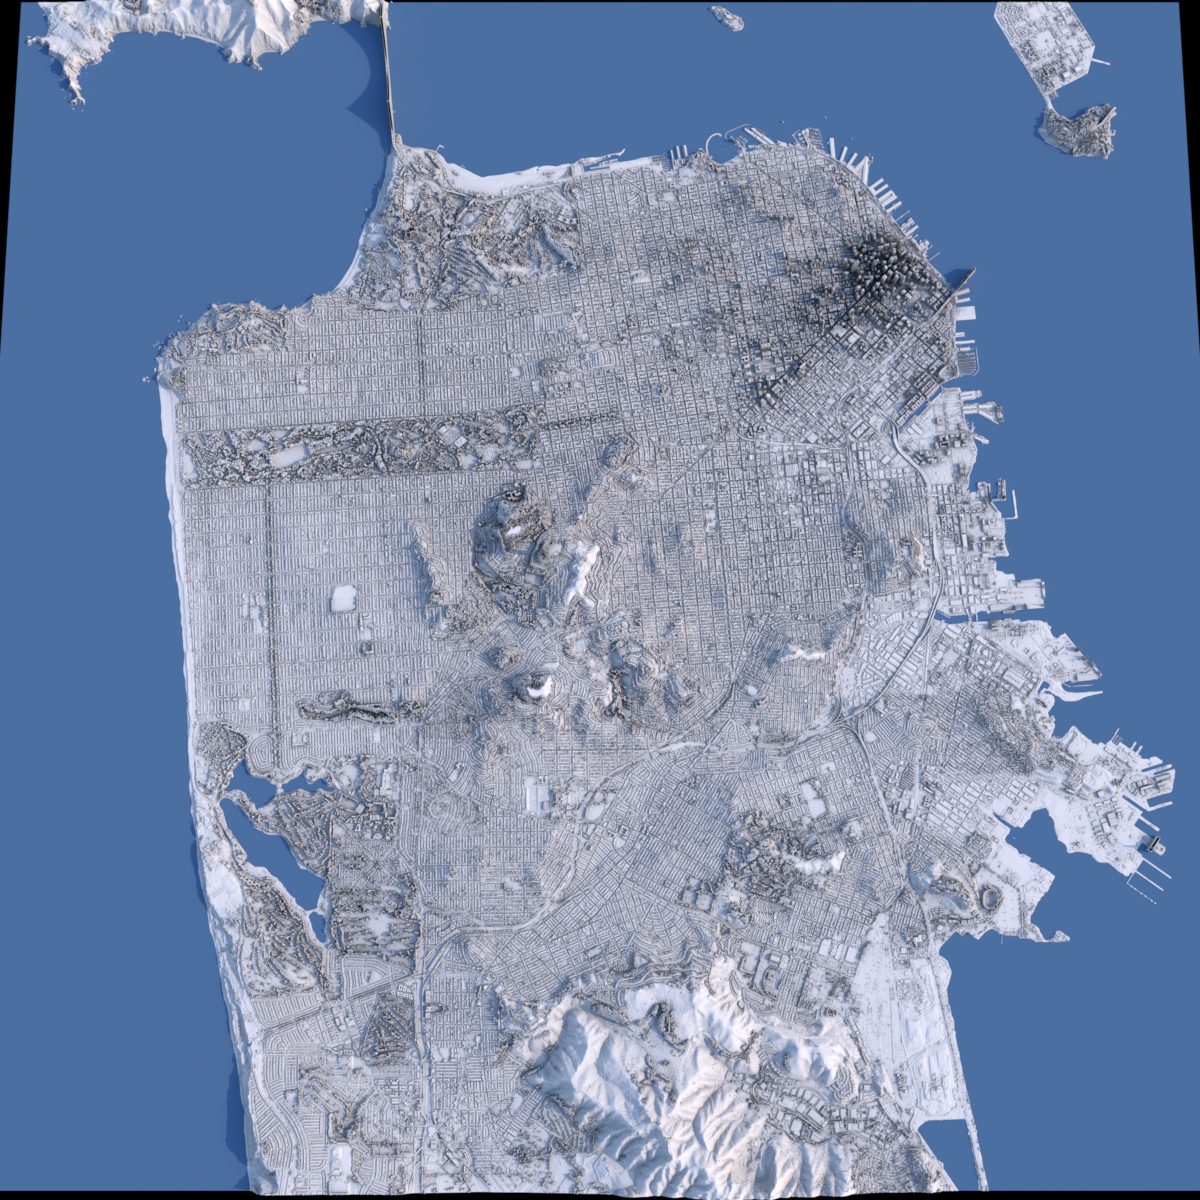 Preview of LIDAR Relief rendering of San Francisco - Perspective